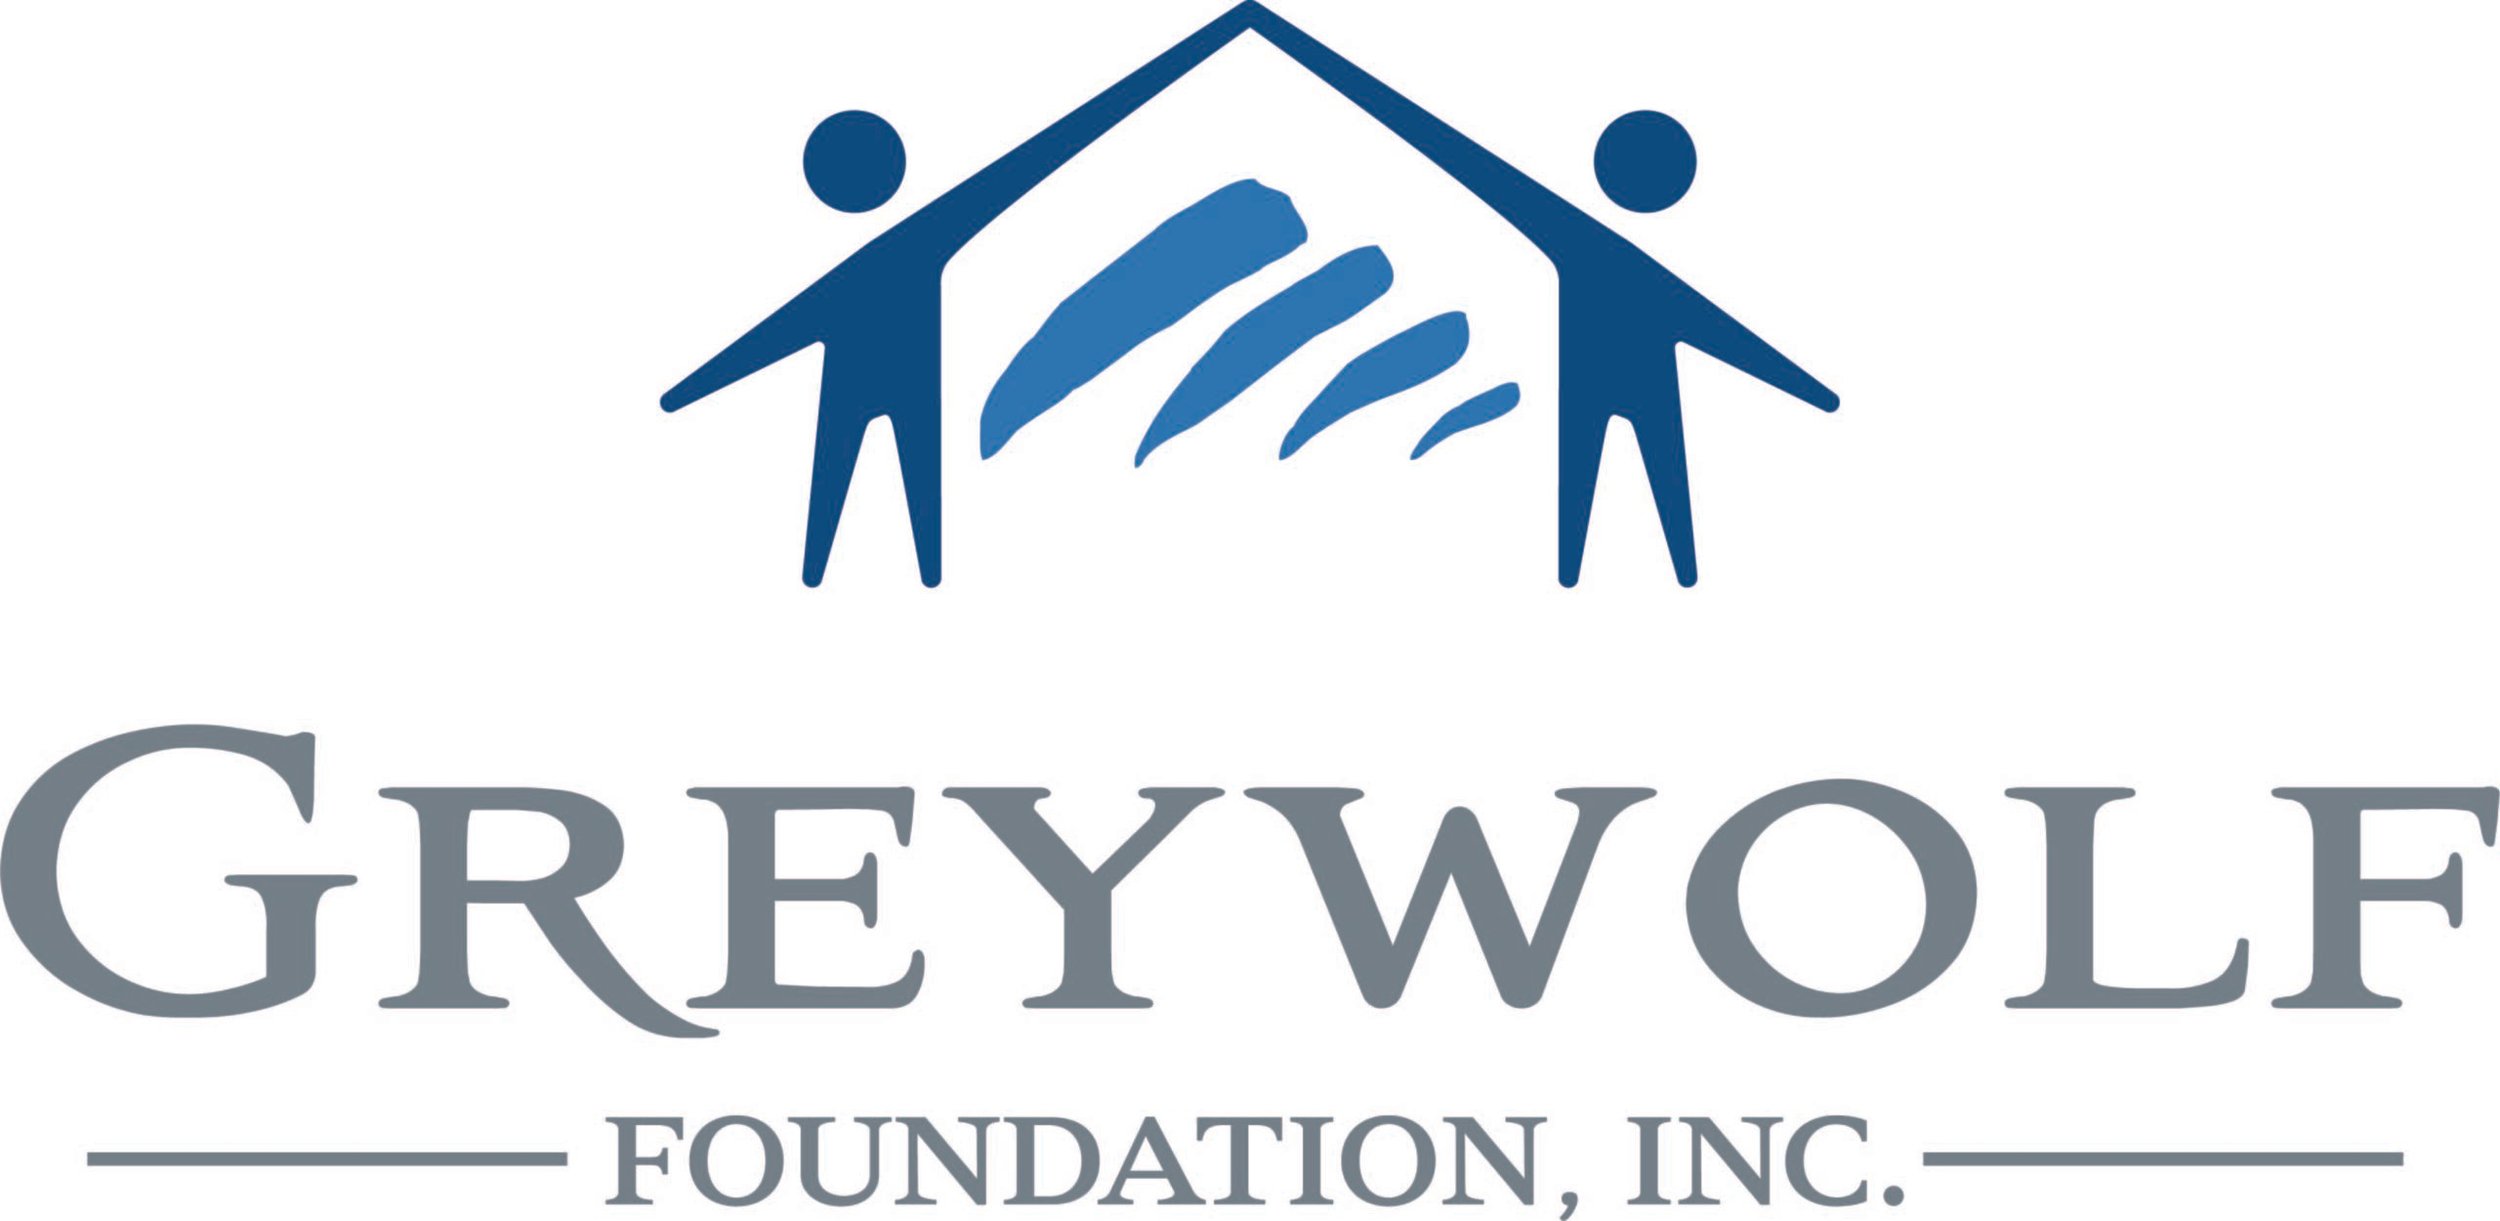 Greywolf Foundation Logo.jpg